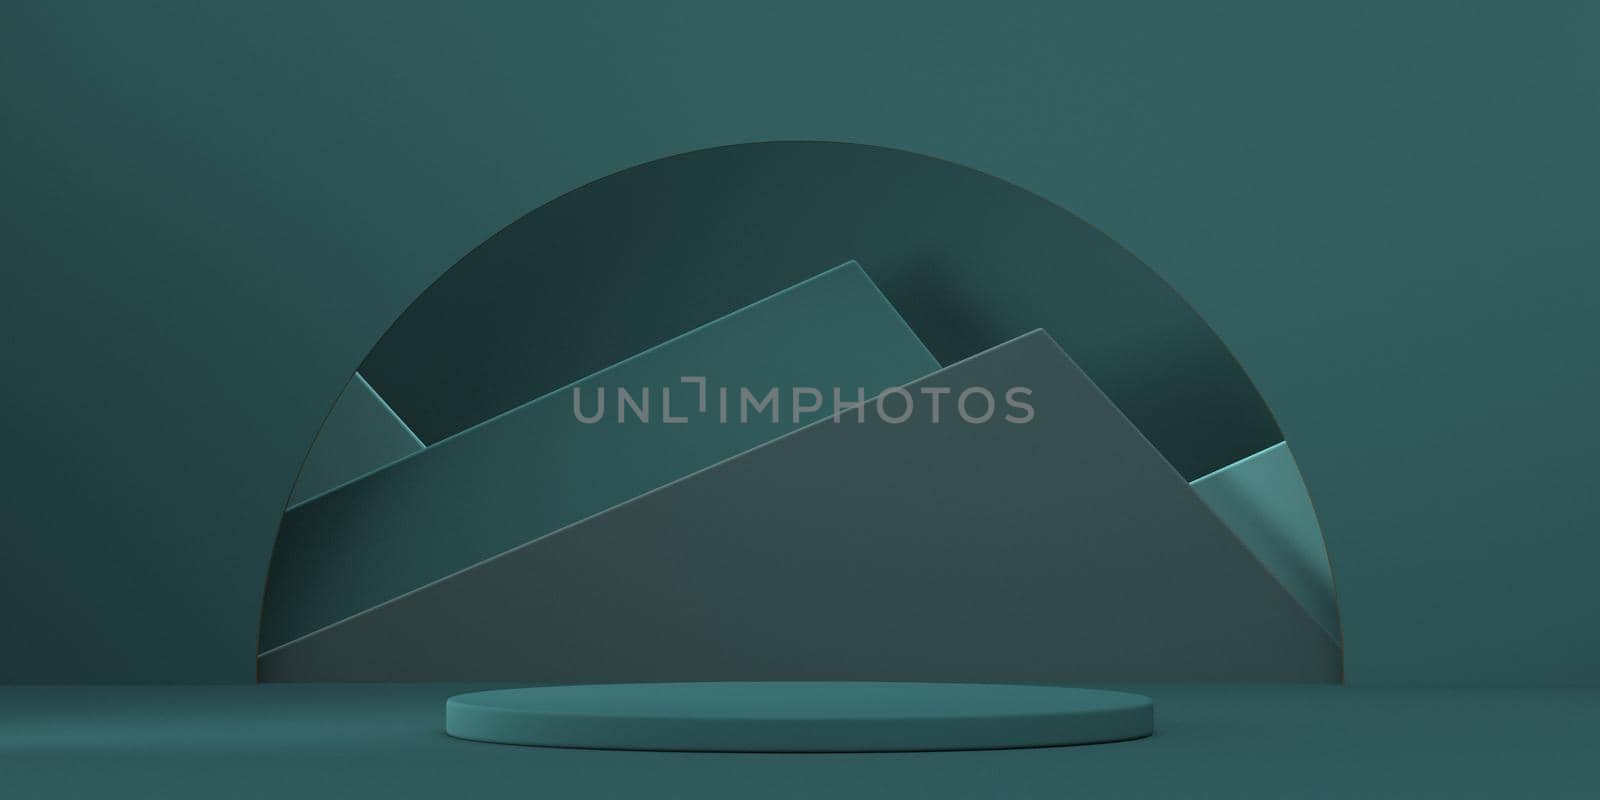 Mock up podium for product presentation abstract mountains landscape 3D render illustration on green background